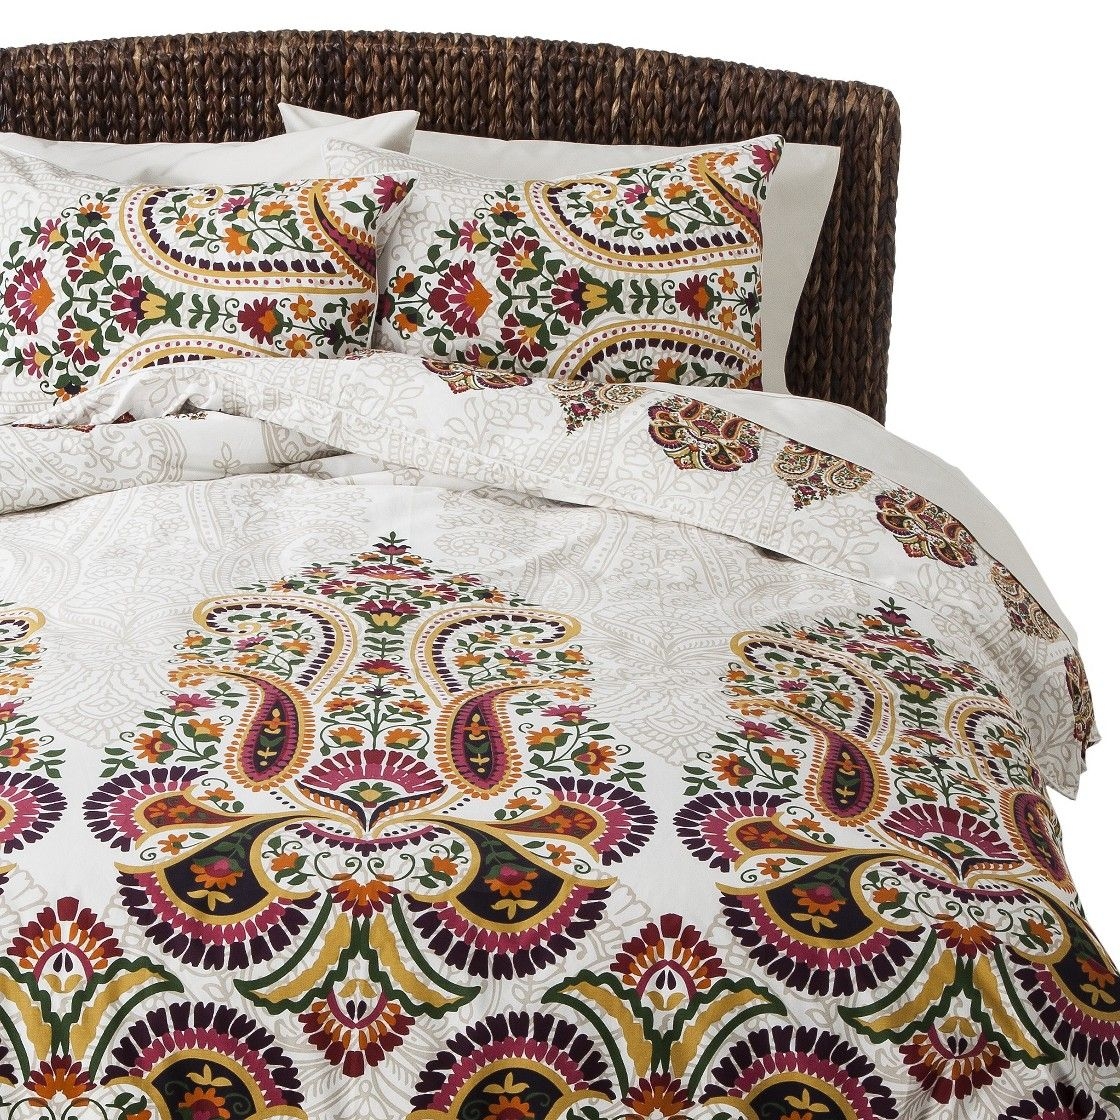 Moroccan pattern bedding